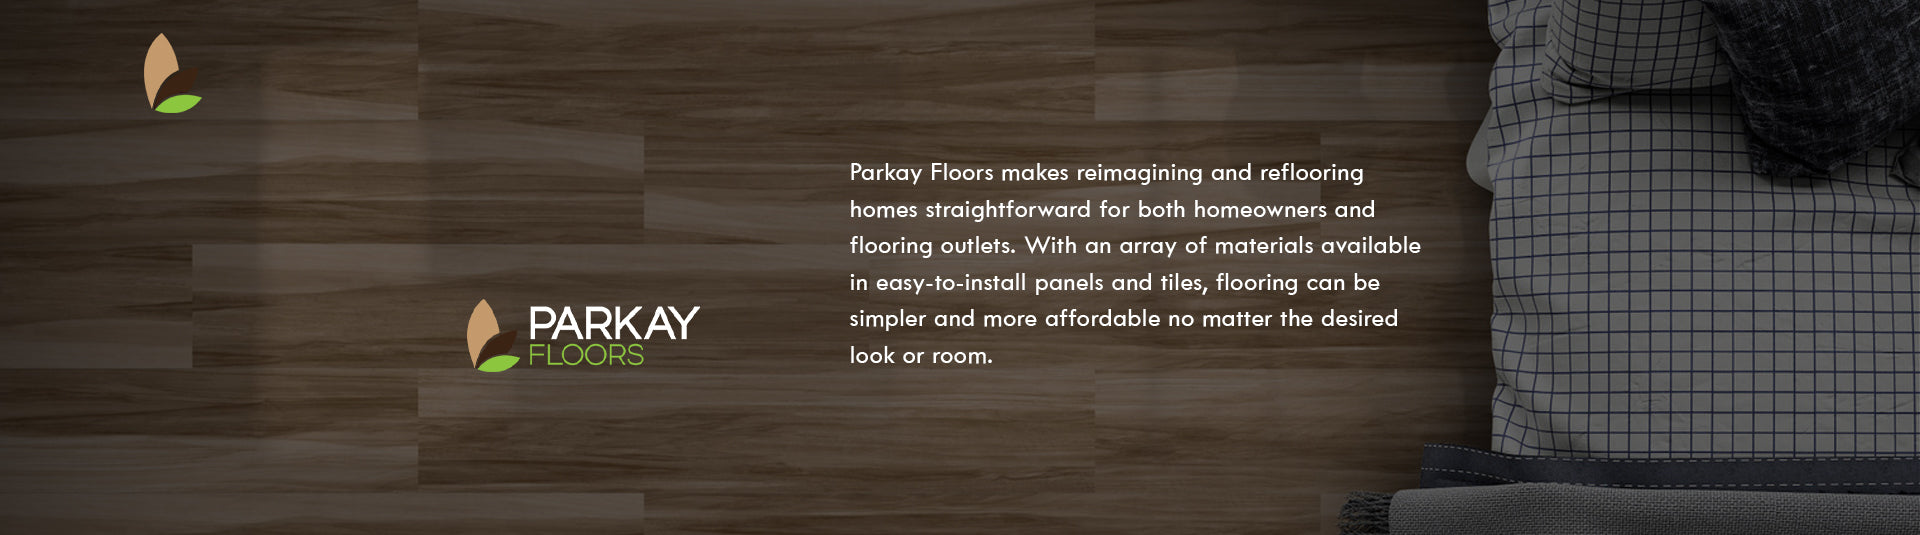 Oyster Gray - Parkay Floors